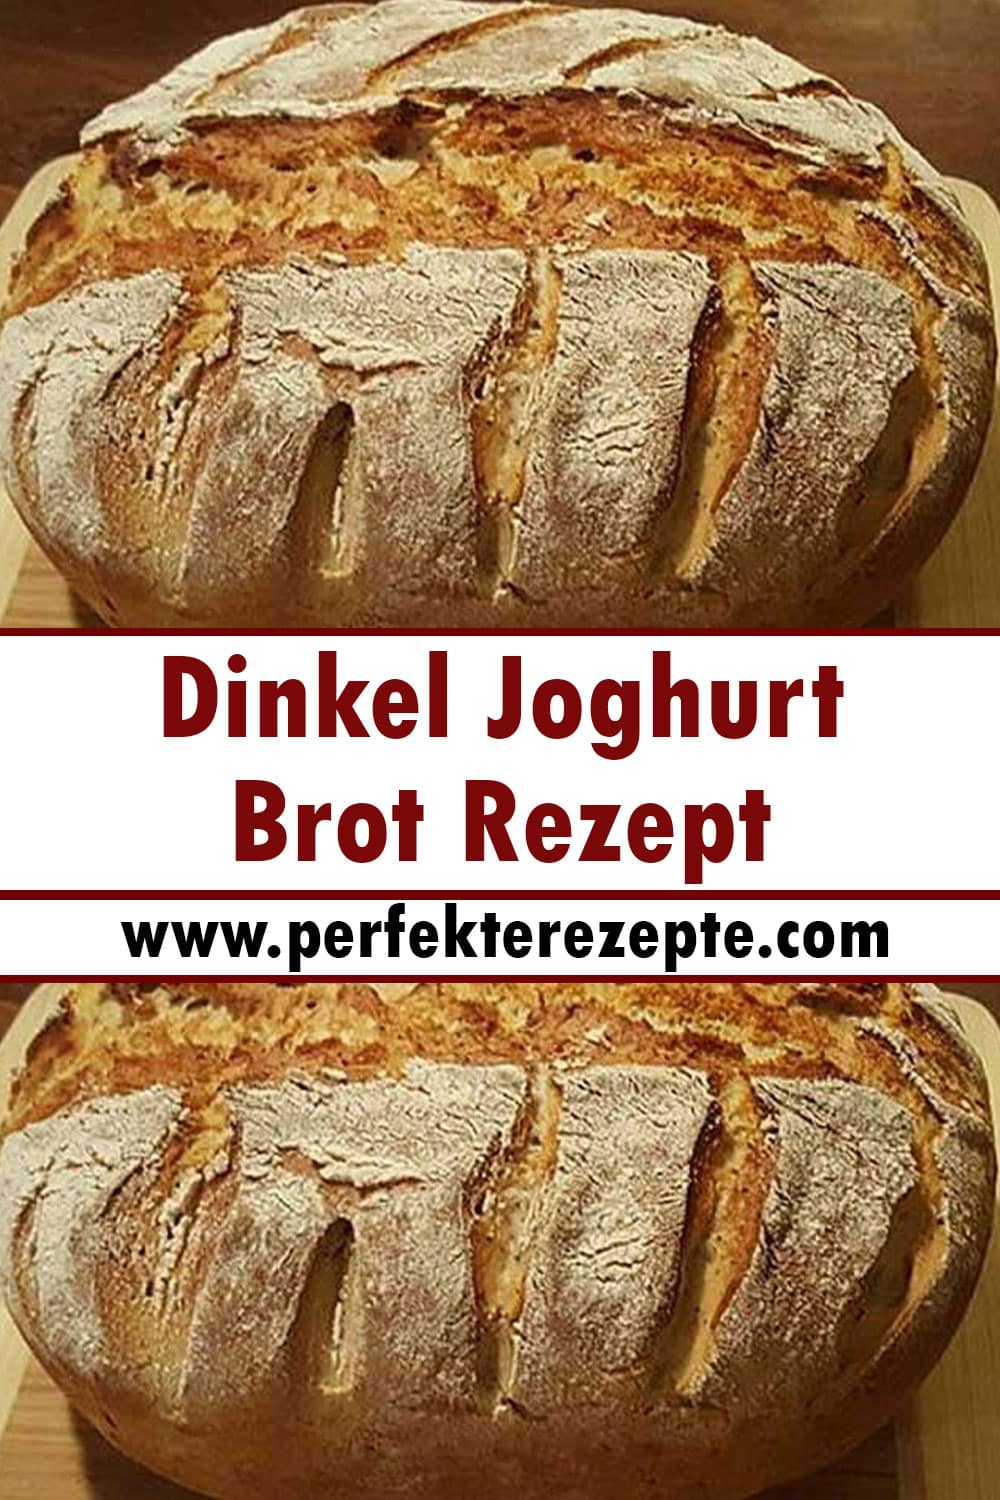 Dinkel Joghurt Brot Rezept